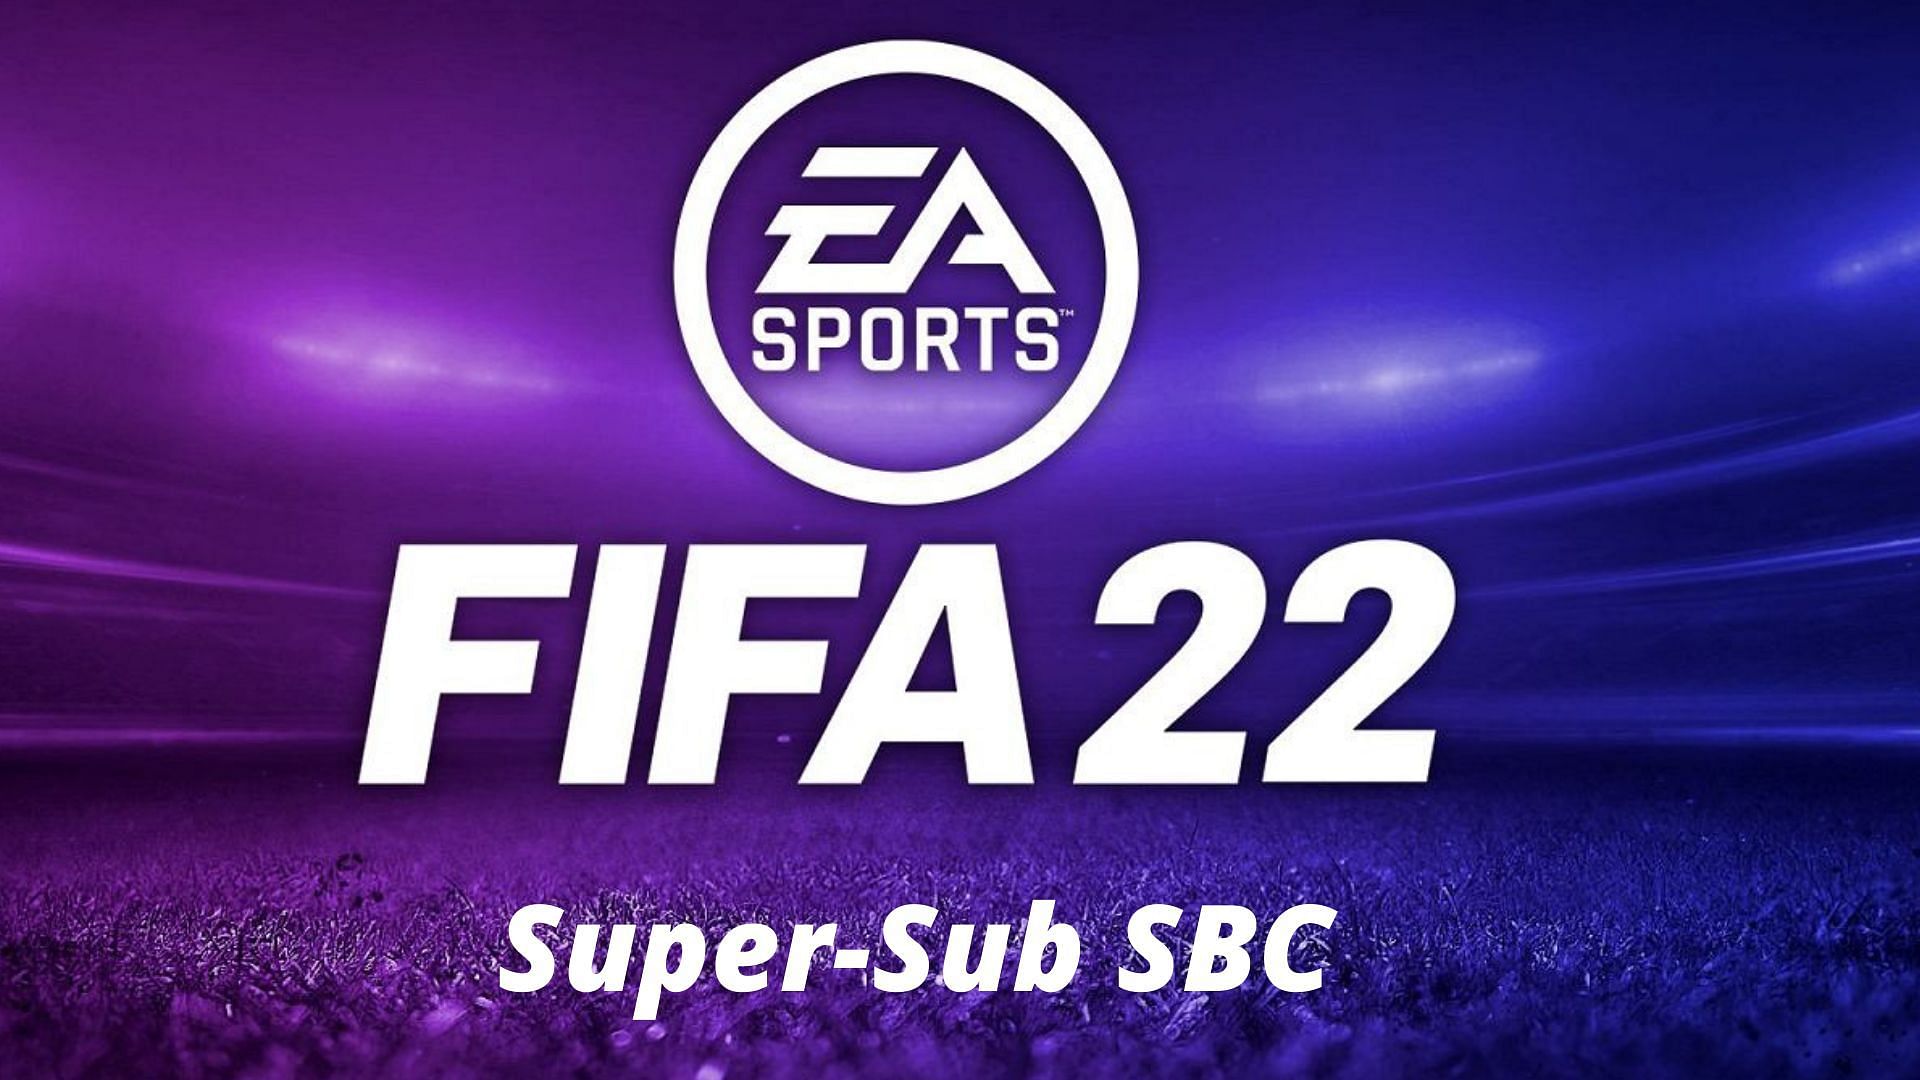 Super-Sub SBC is now live in FIFA 22 Ultimate Team (Image via Sportskeeda)